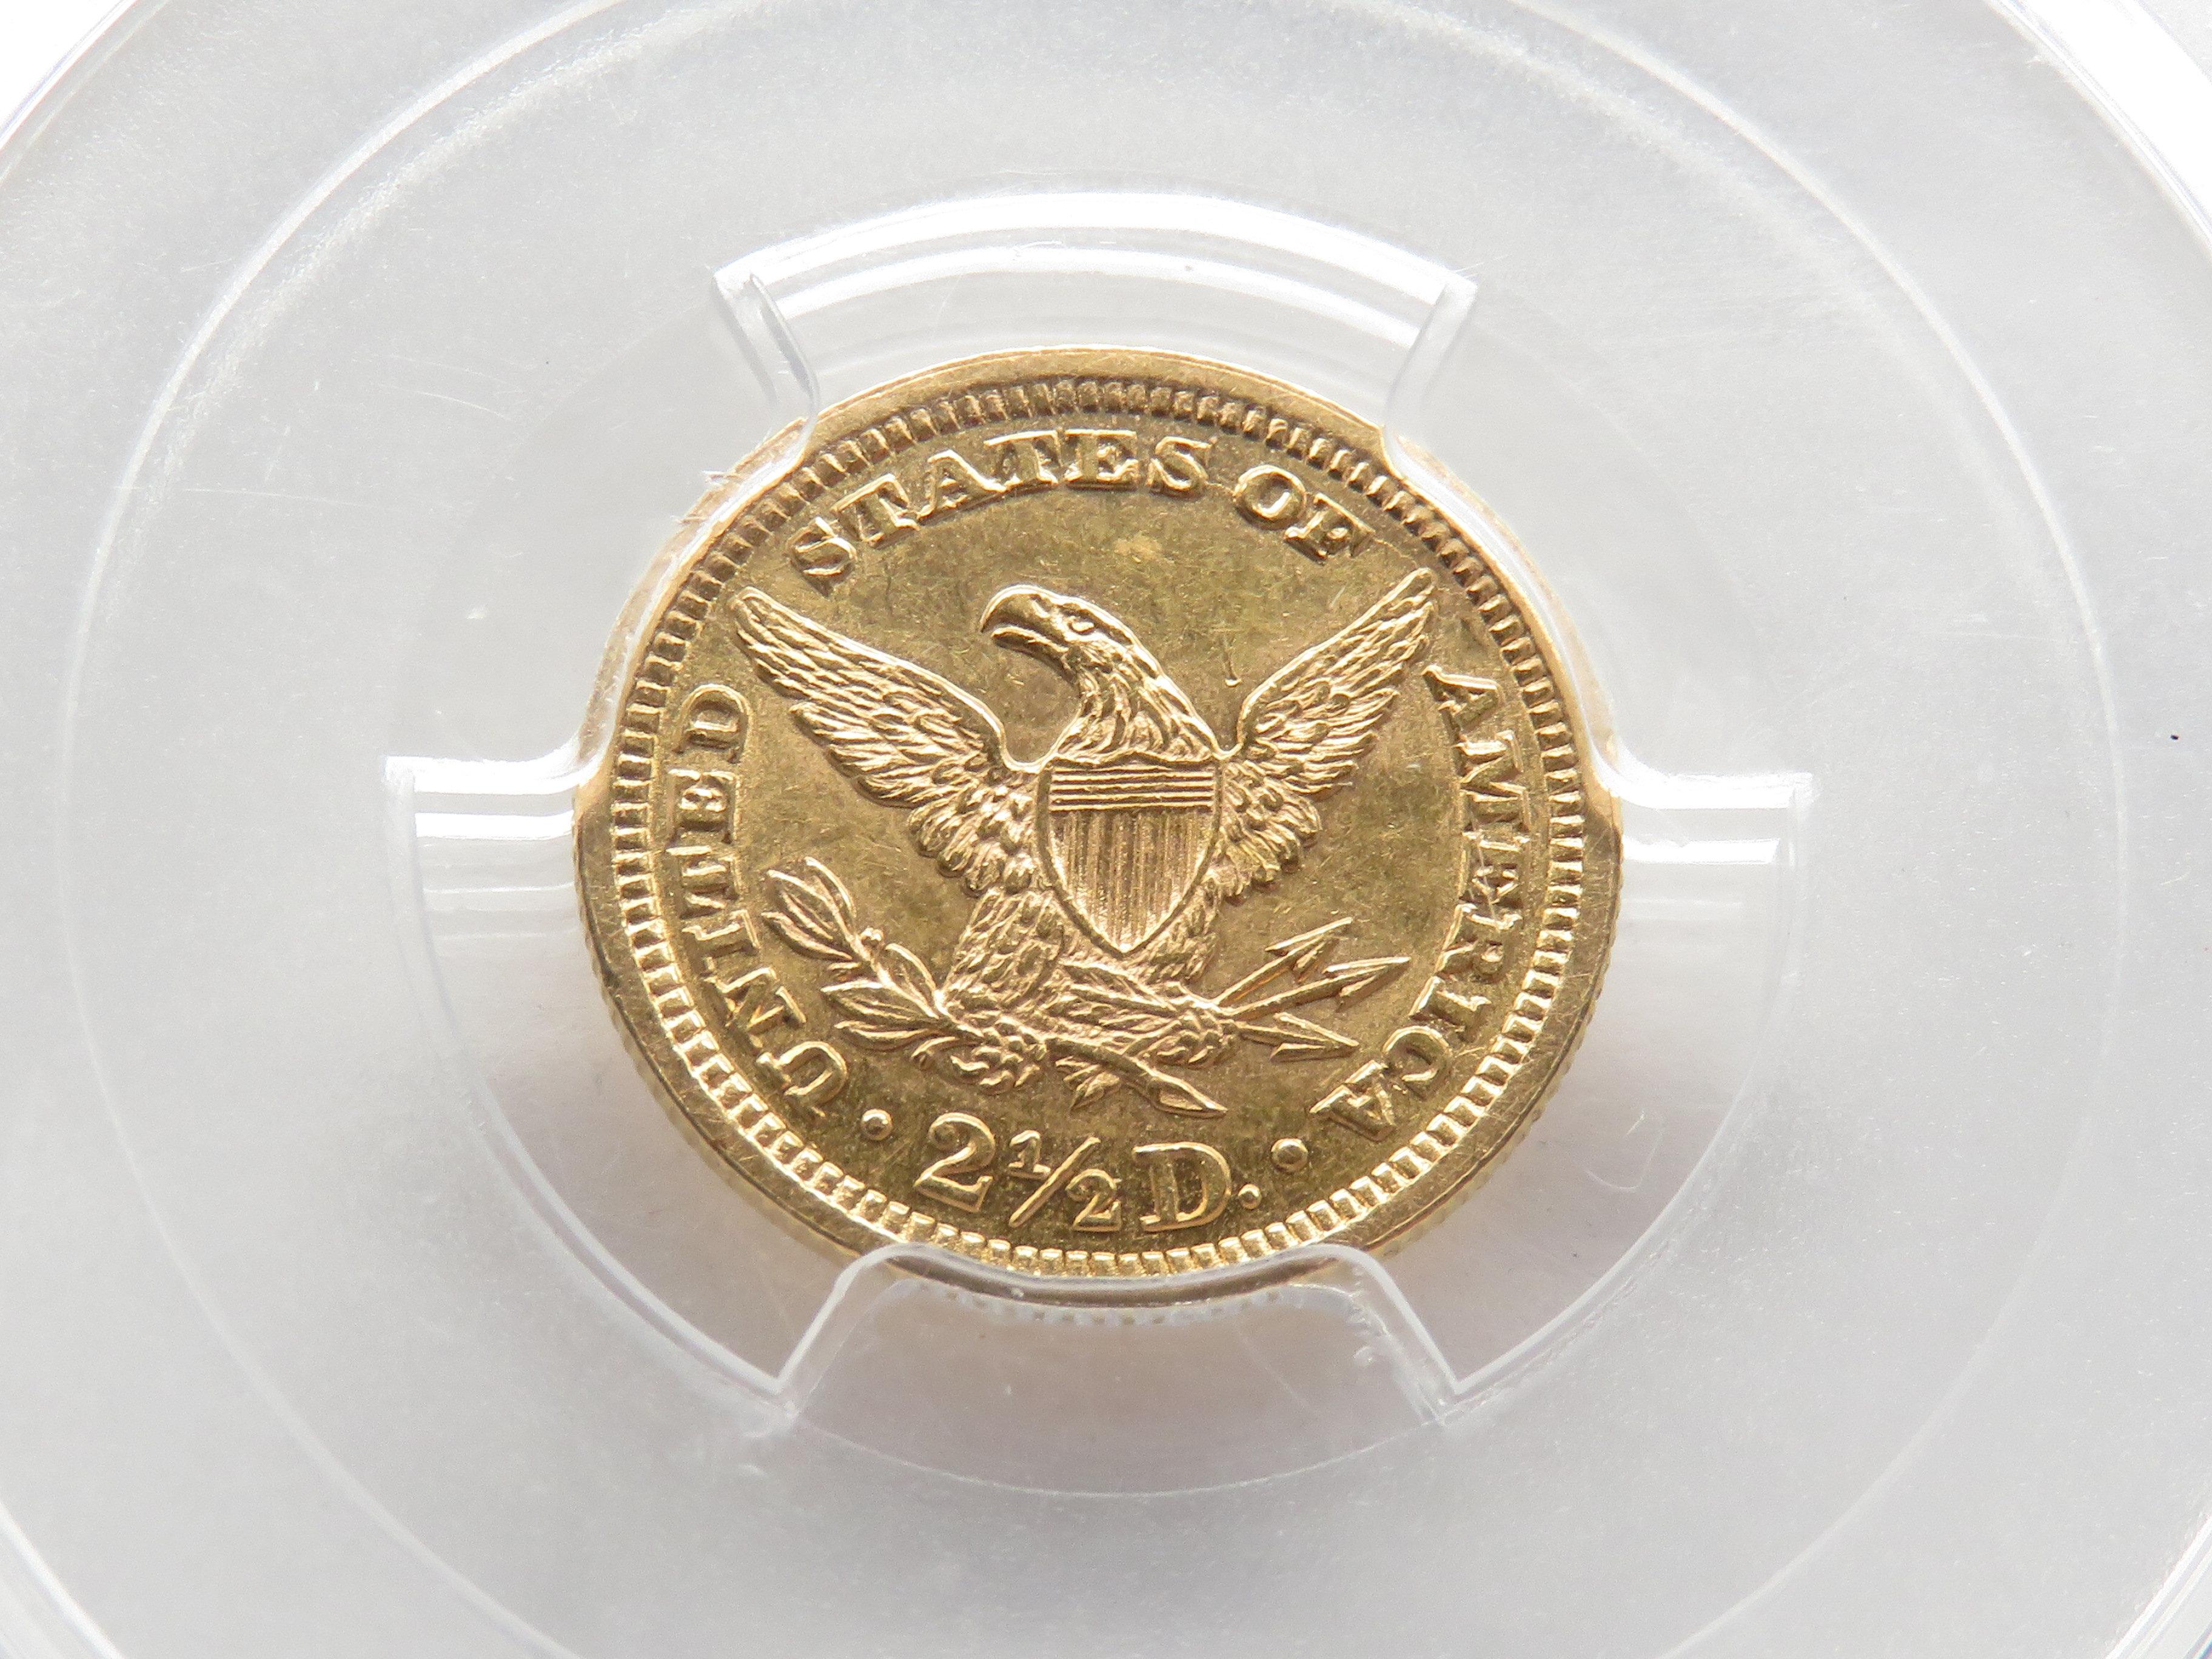 $2.50 Liberty Head Gold Quarter Eagle 1895 PCGS AU58 (Only 6,000 minted)